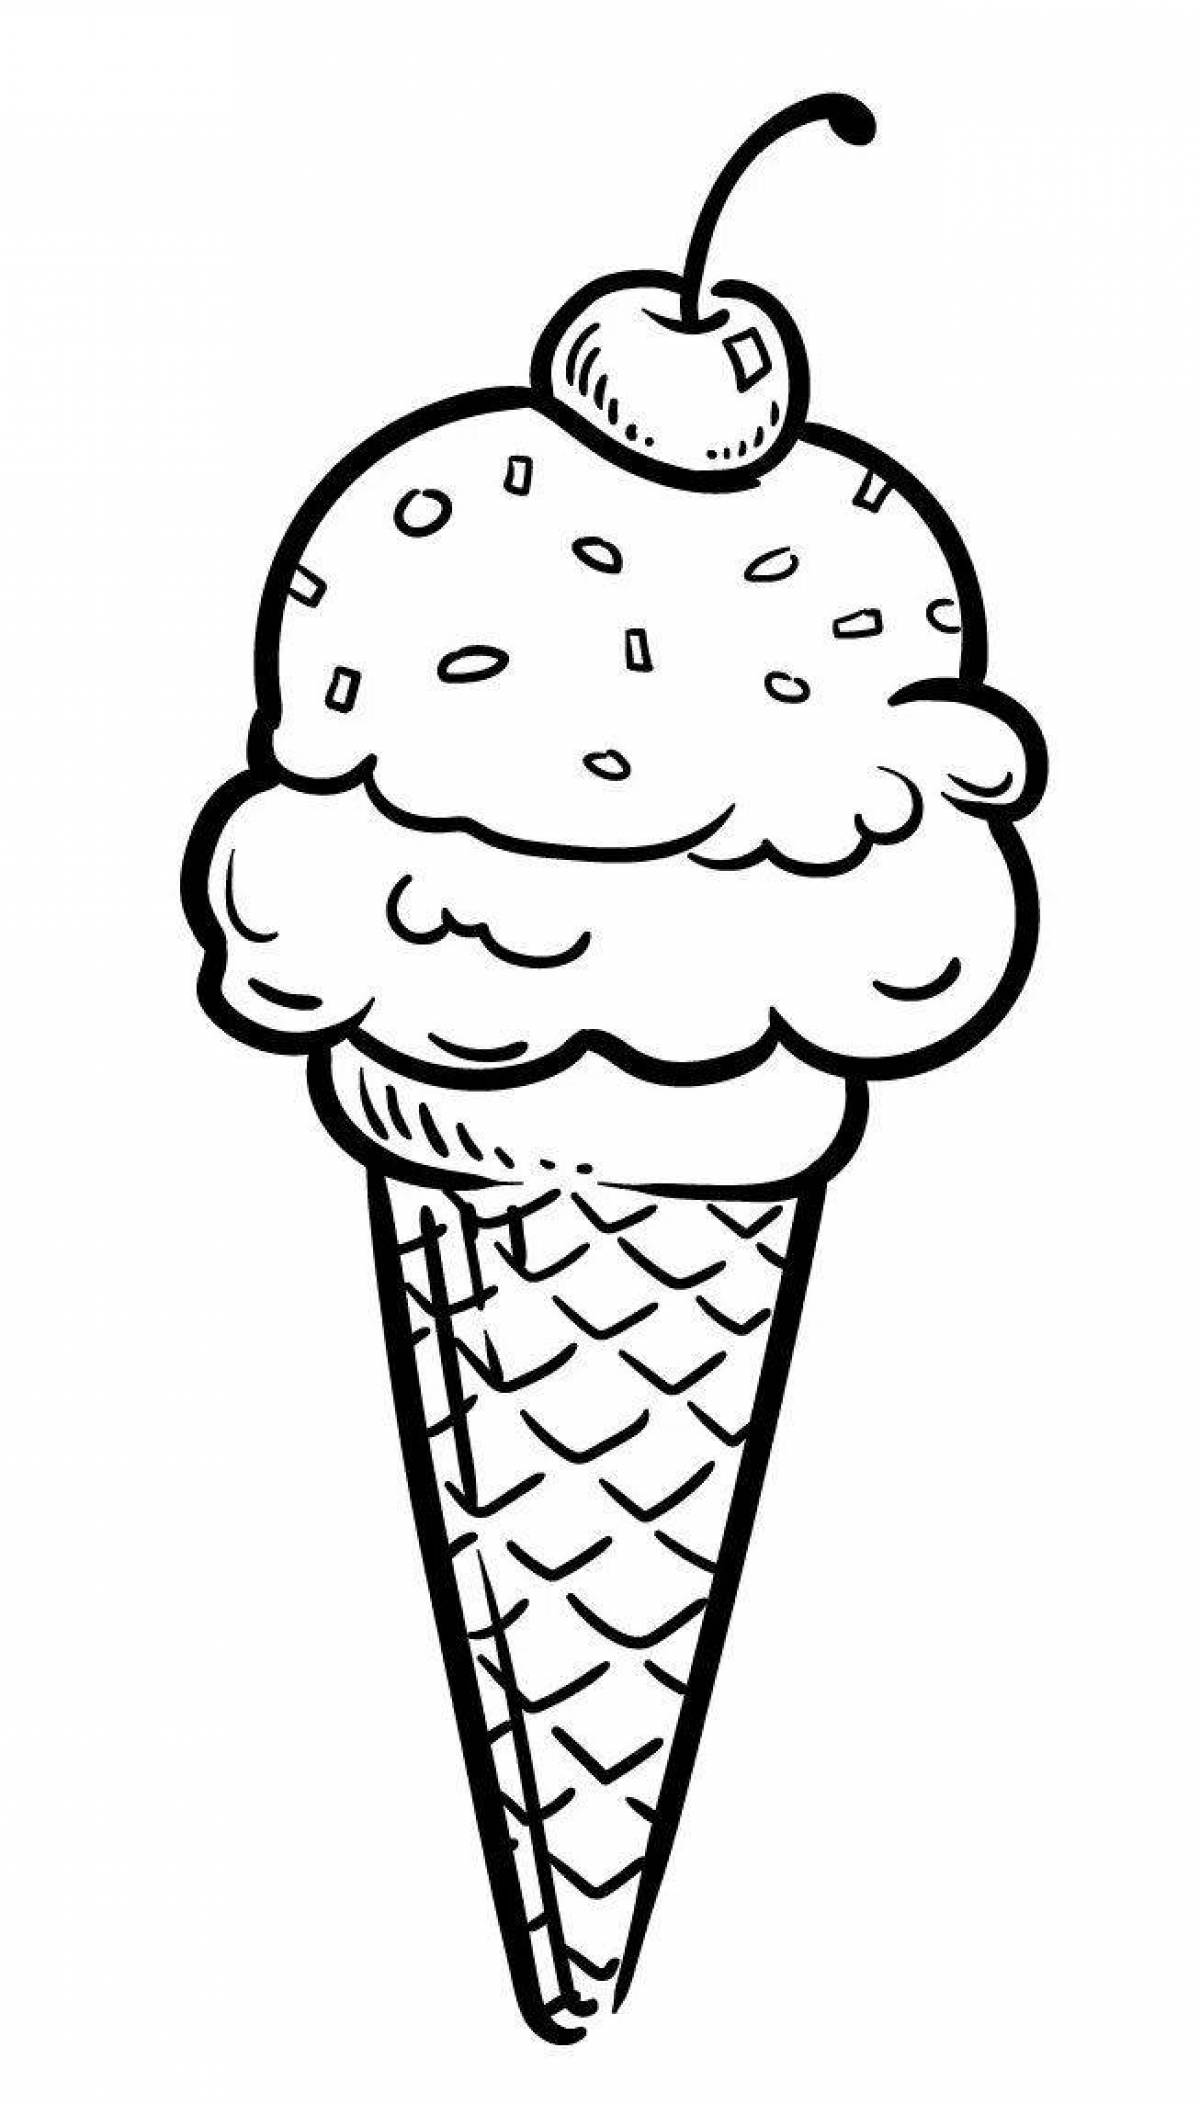 Раскраска мороженки. Раскраска мороженое. Раскраска мороженое милое. Картинка мороженое раскраска. Мороженое раскраска для детей.